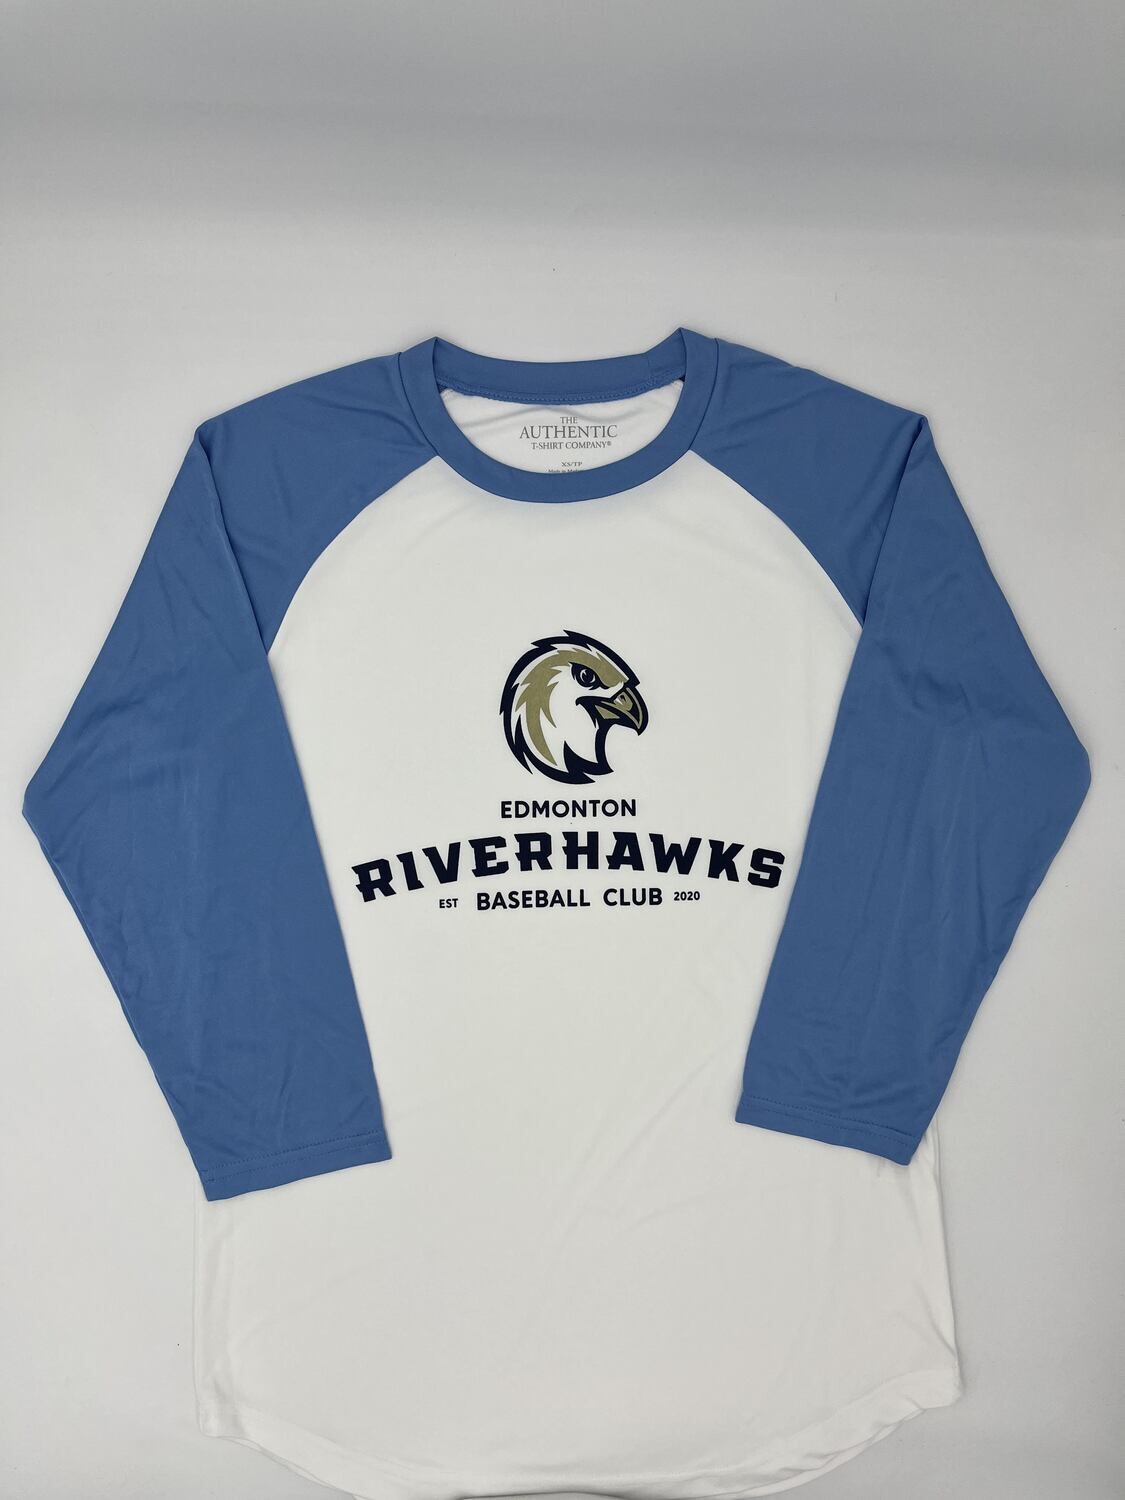 Riverhawks Game 3/4 Shirt